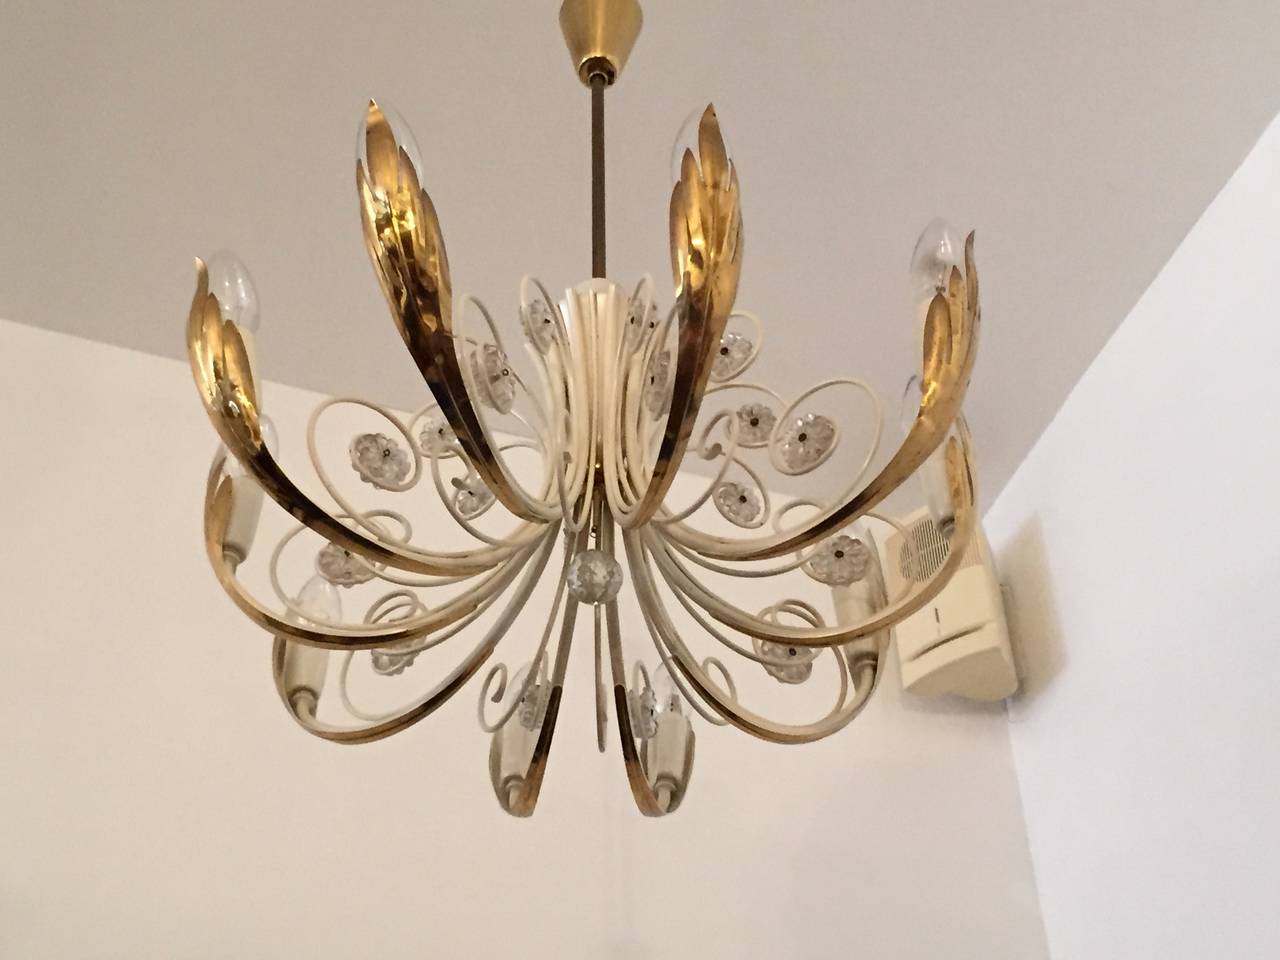 A wonderful original Austrian 1950s 10 light polished brass and white enamel chandelier by Emil Stejnar for Rupert Nikoll. Rewired.